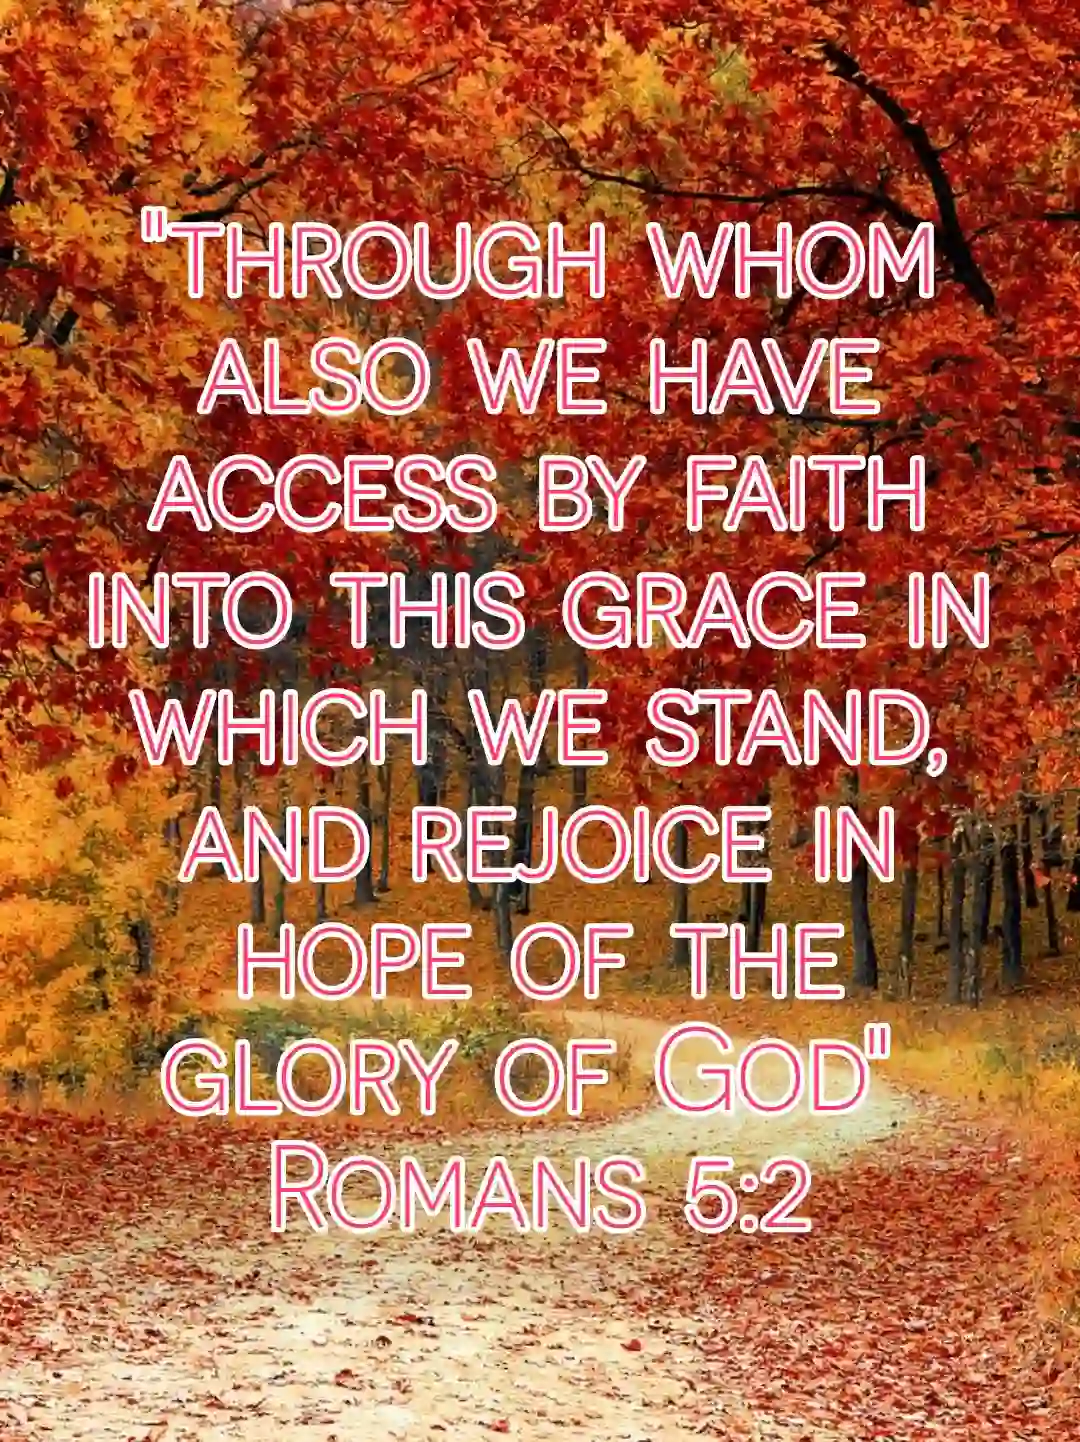 bible verses on faith and hope (Romans 5:2)